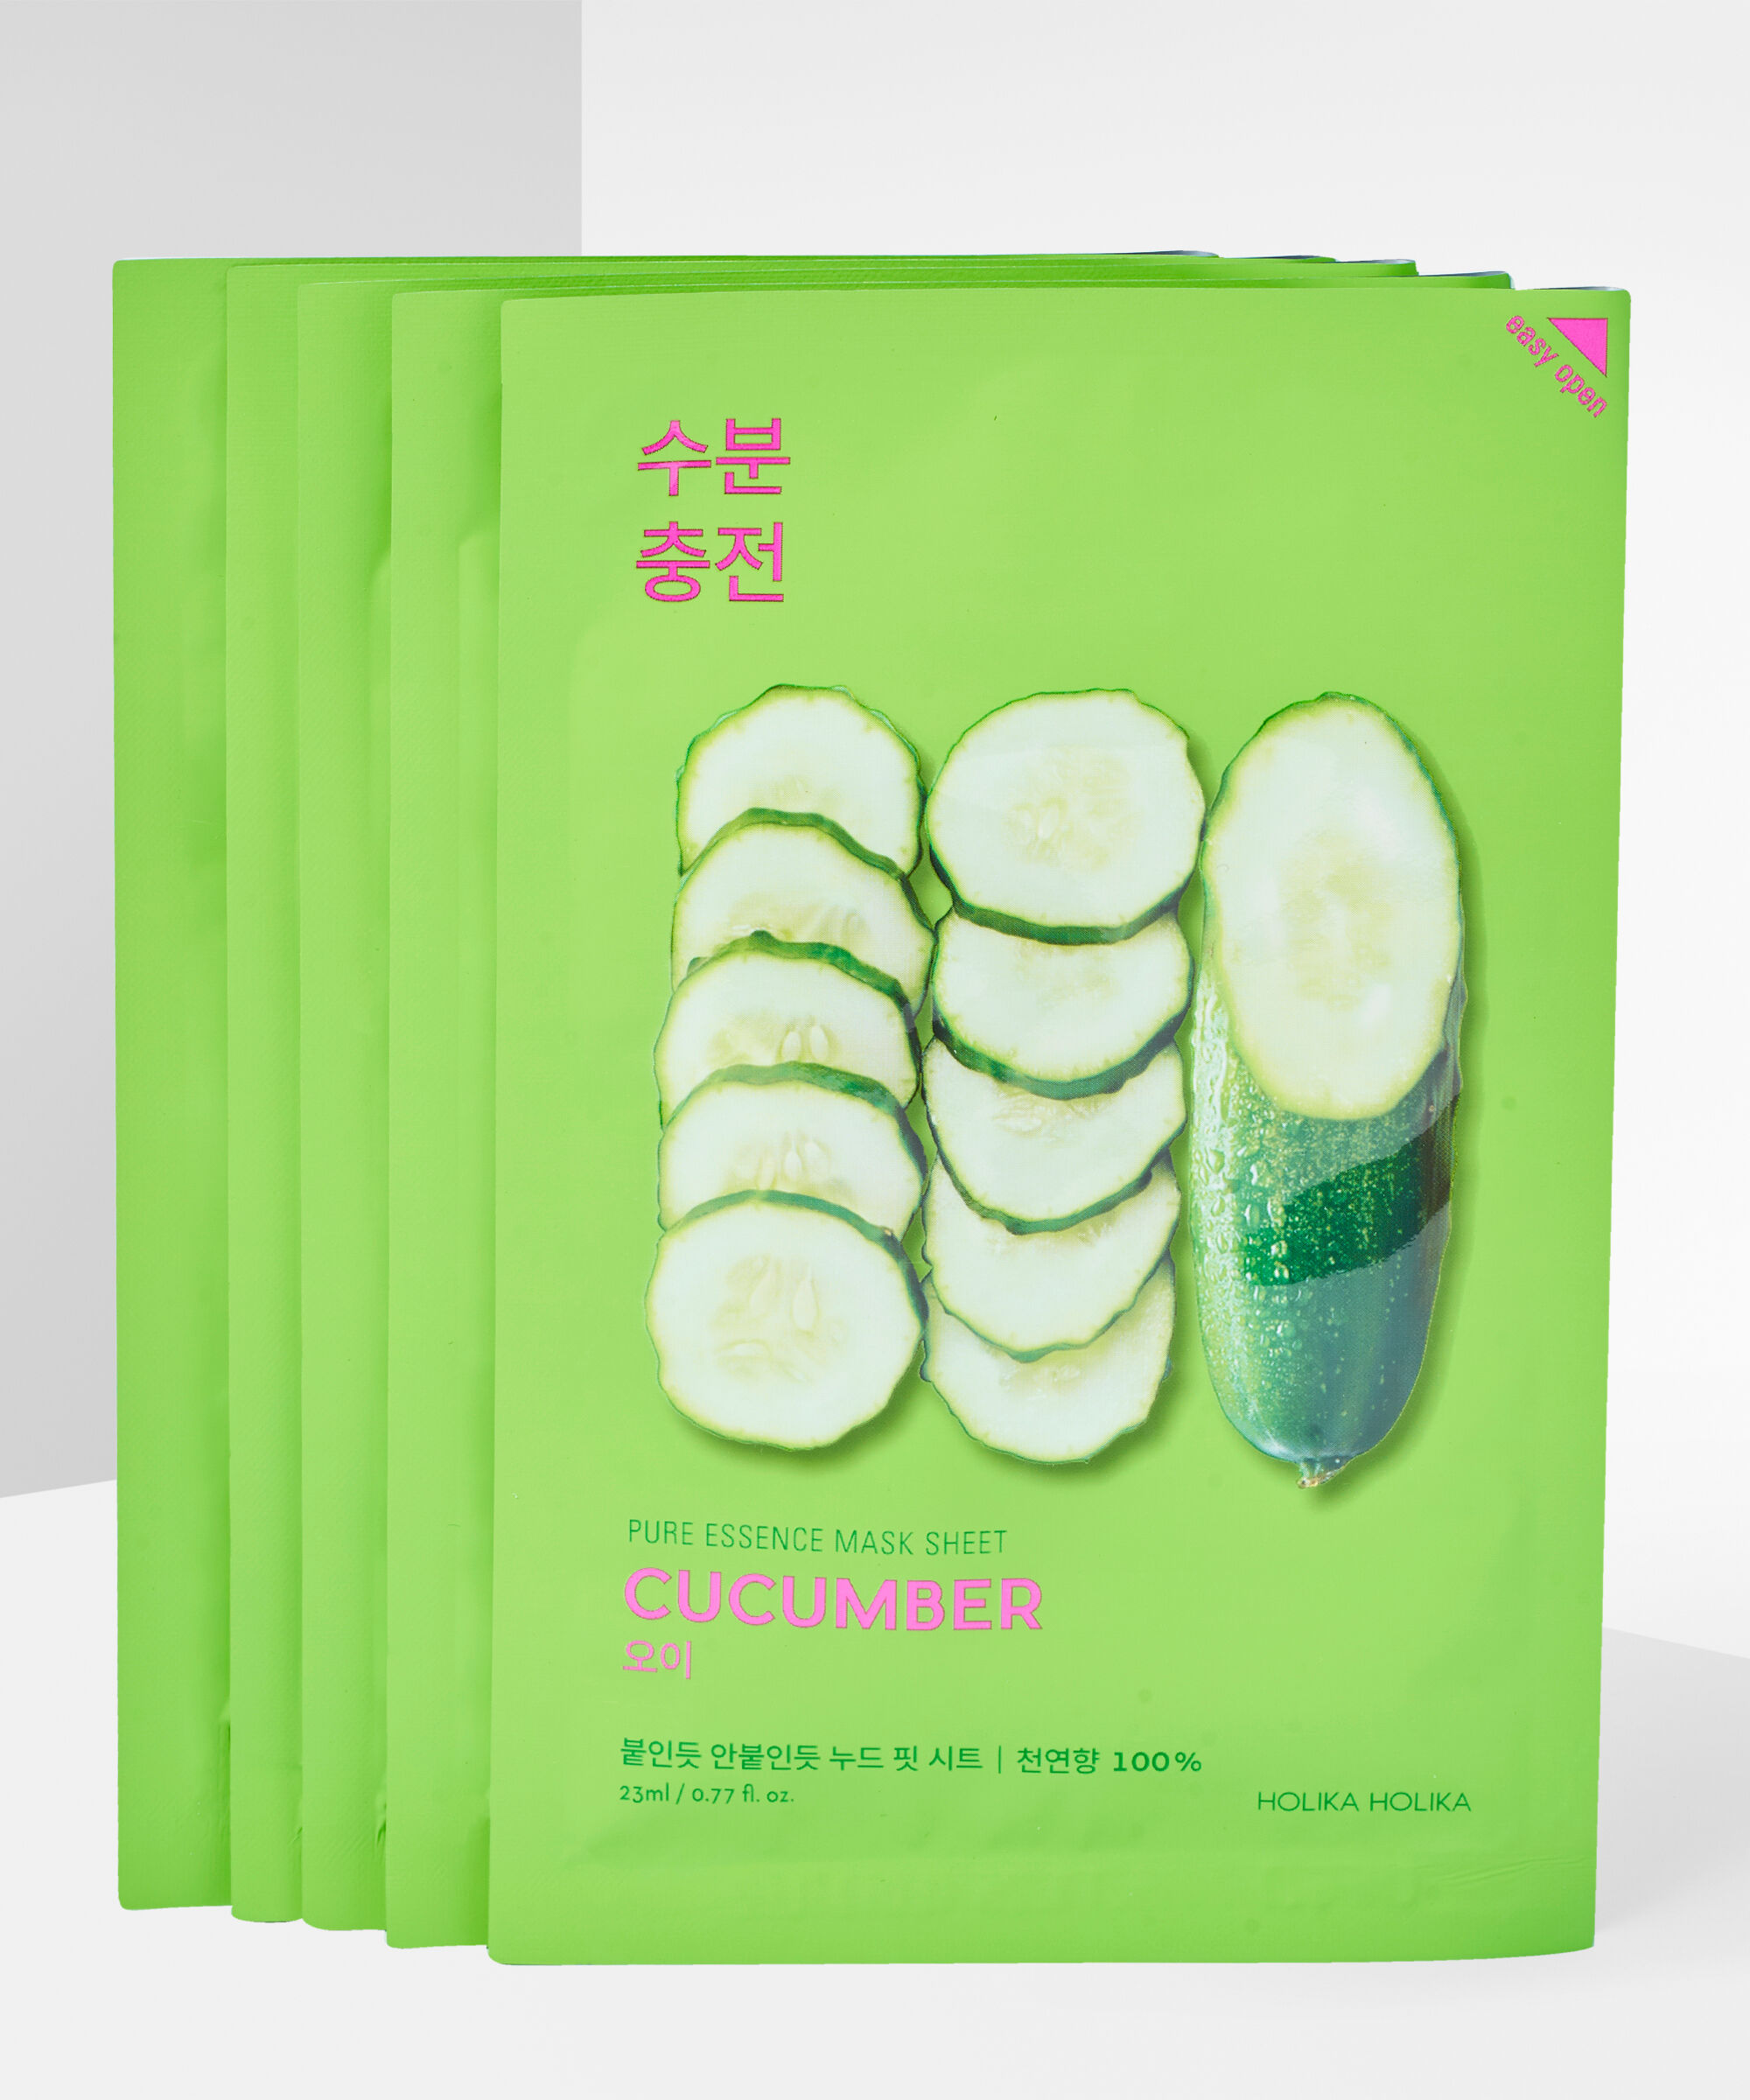 Holika Holika - Pure Essence Mask Sheet Cucumber Pack